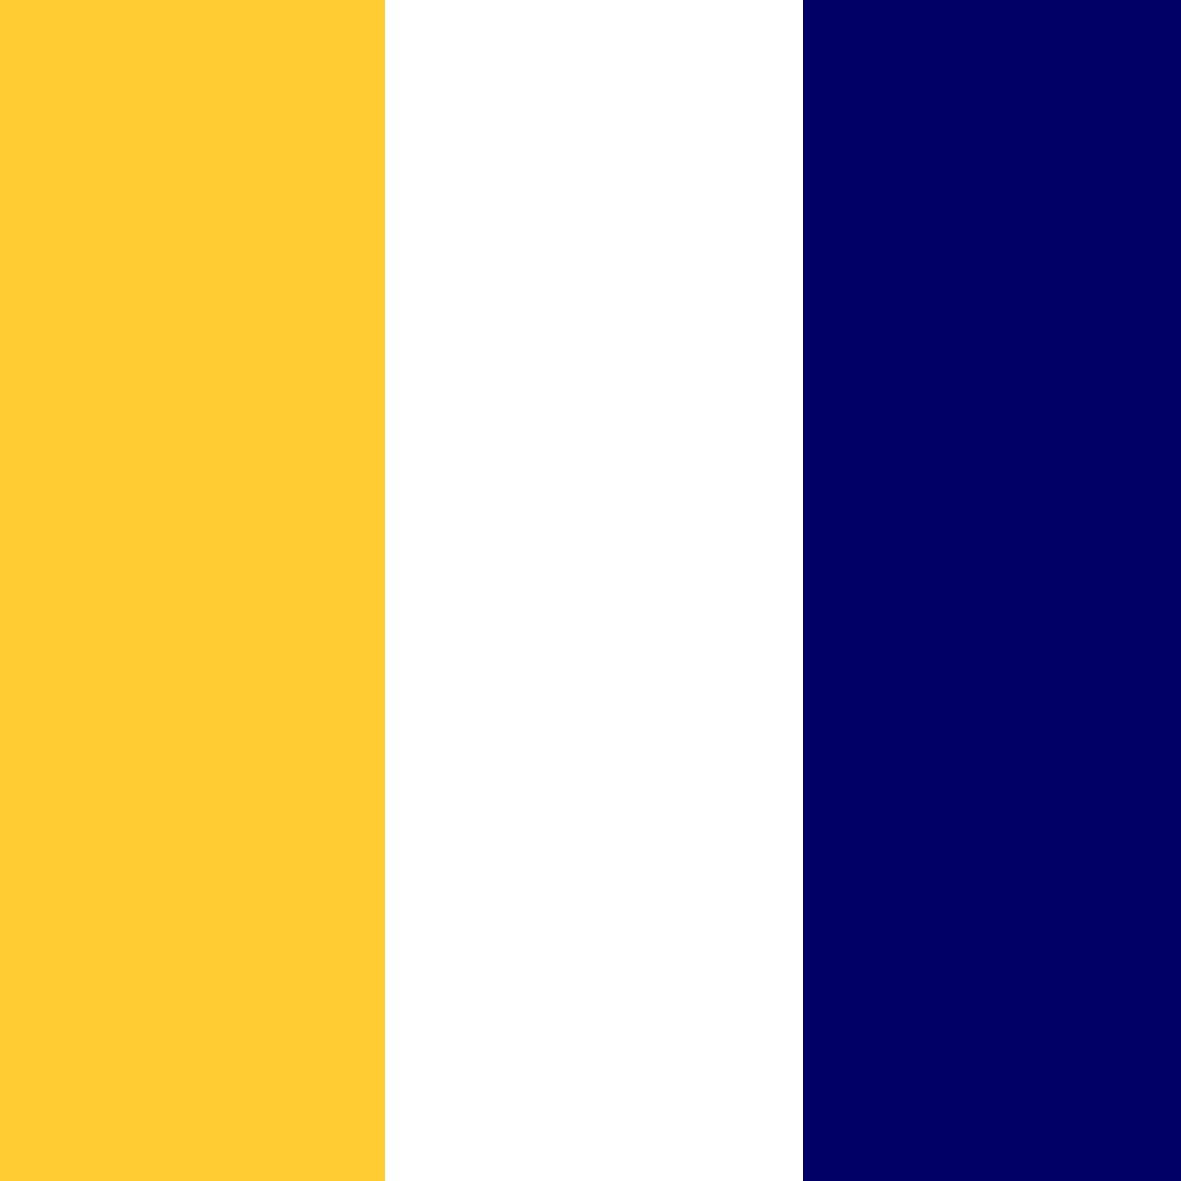 желтый/белый/темно-синий_FFCC33/FFFFFF/000066